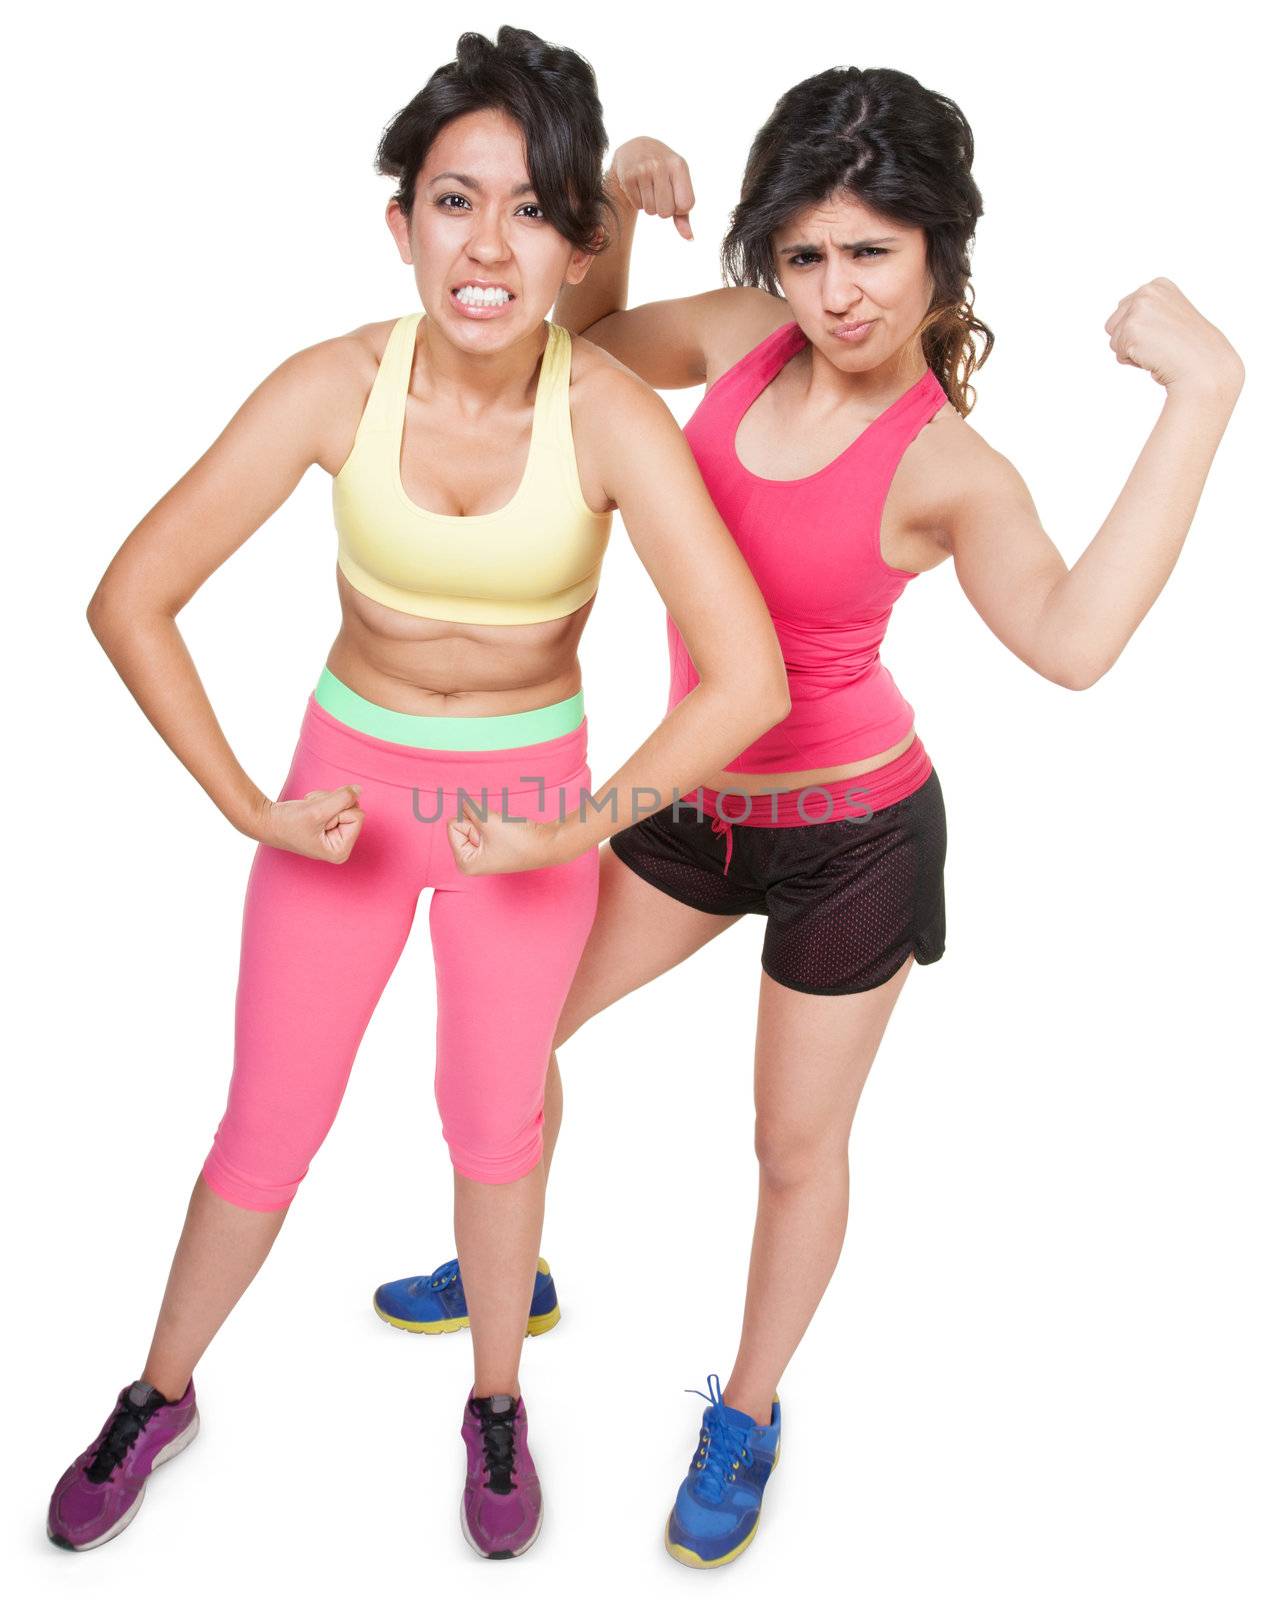 Workout Girls Flexing by Creatista